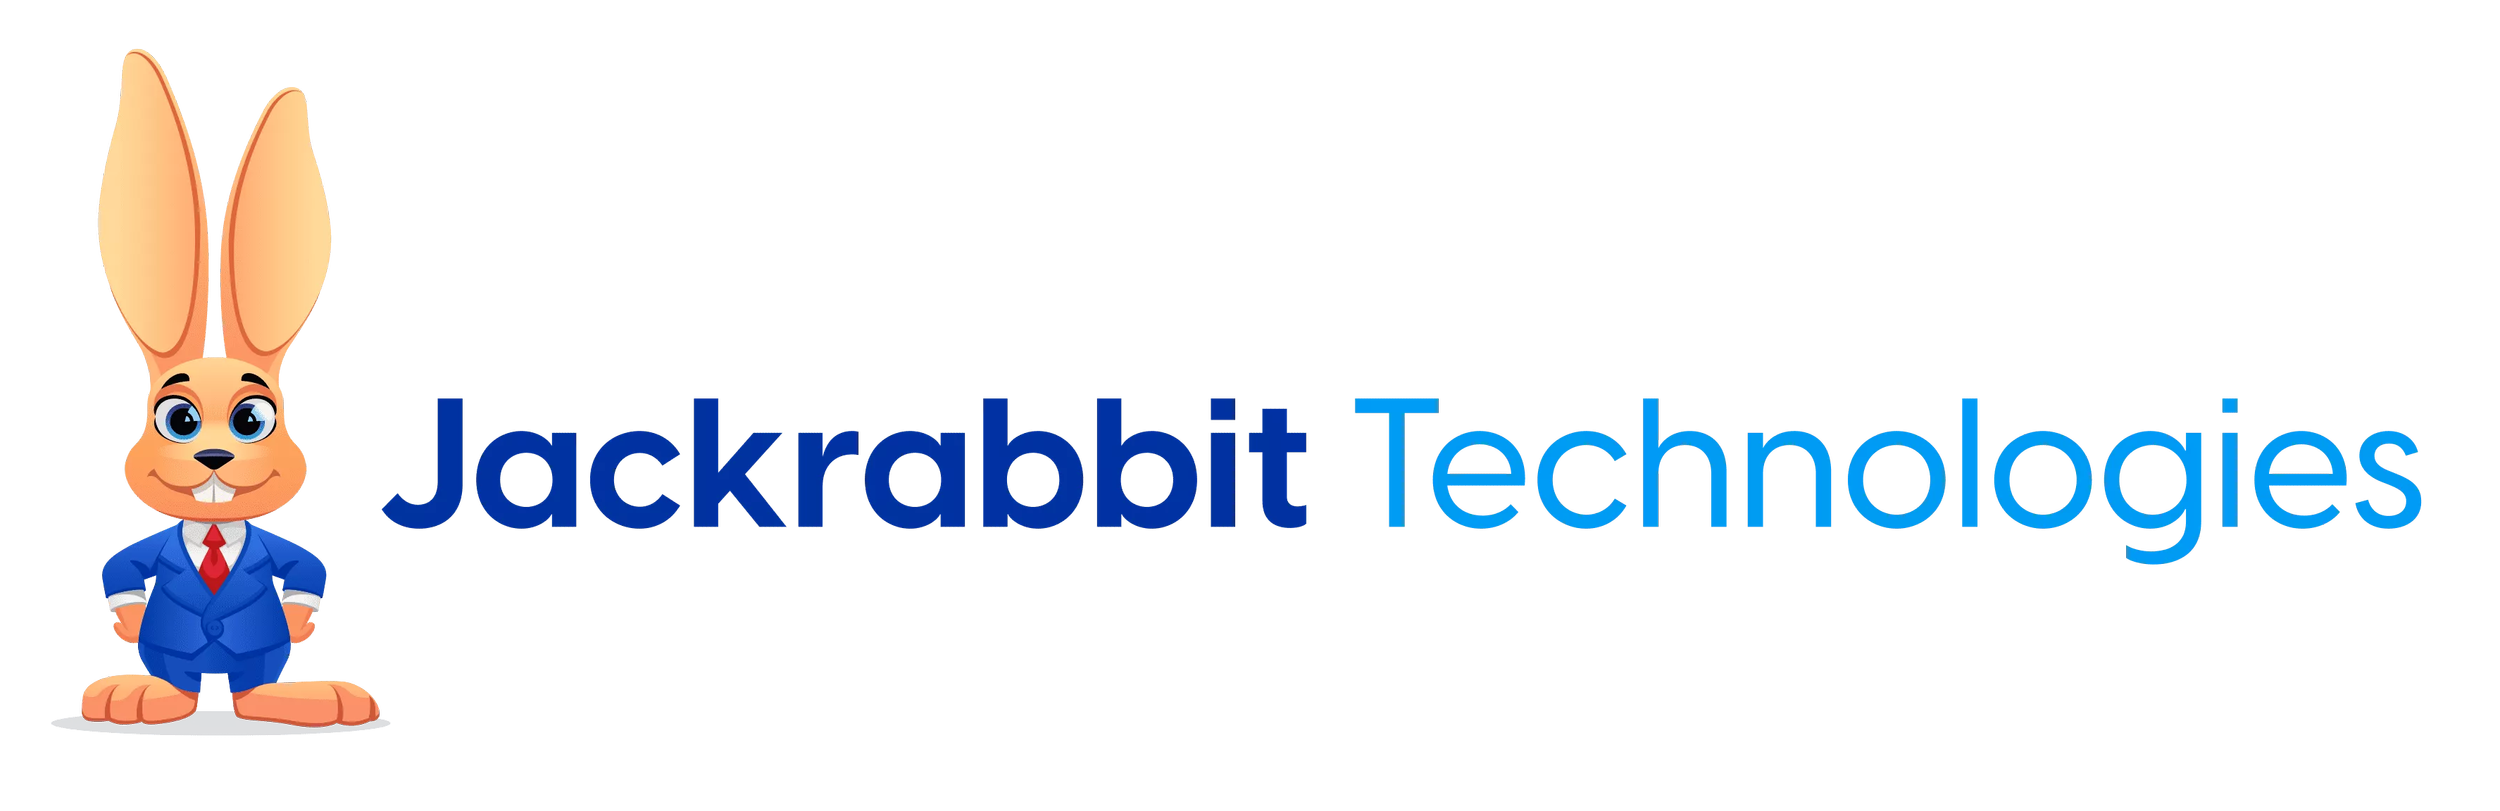 logo-jackrabbit-technologies-2D-horizontal-full-color-2023.png